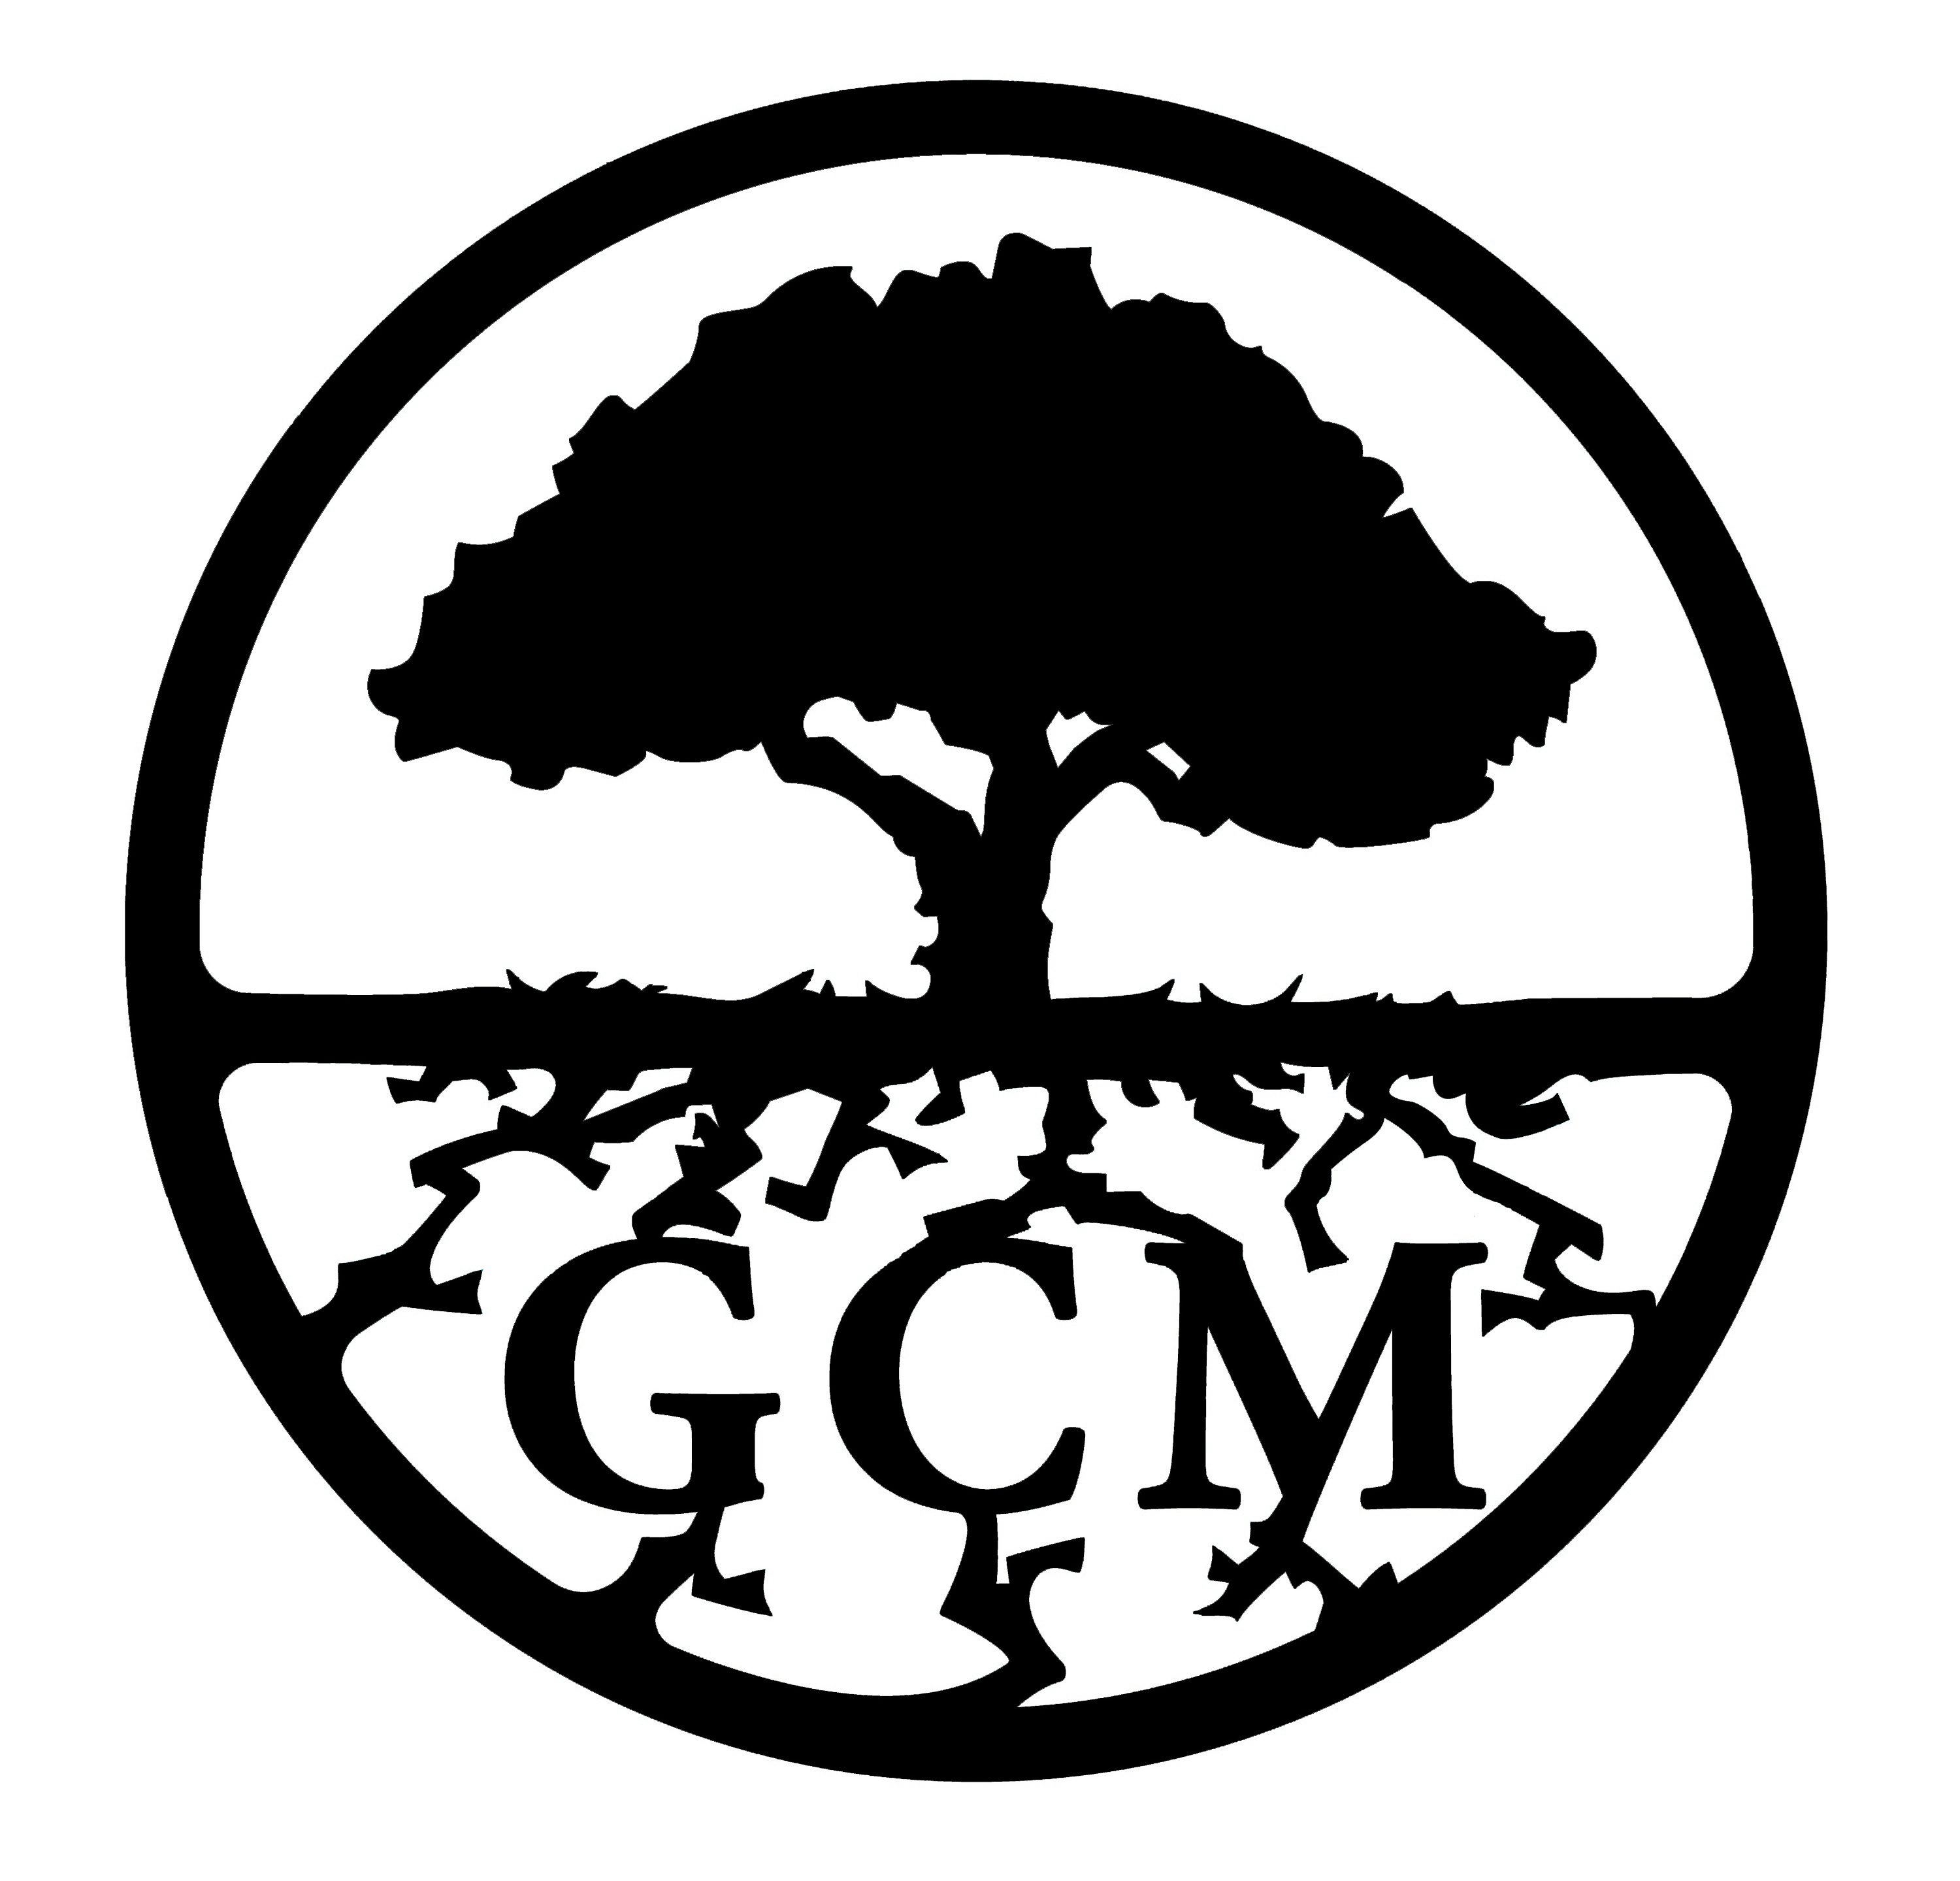 Trademark Logo GCM